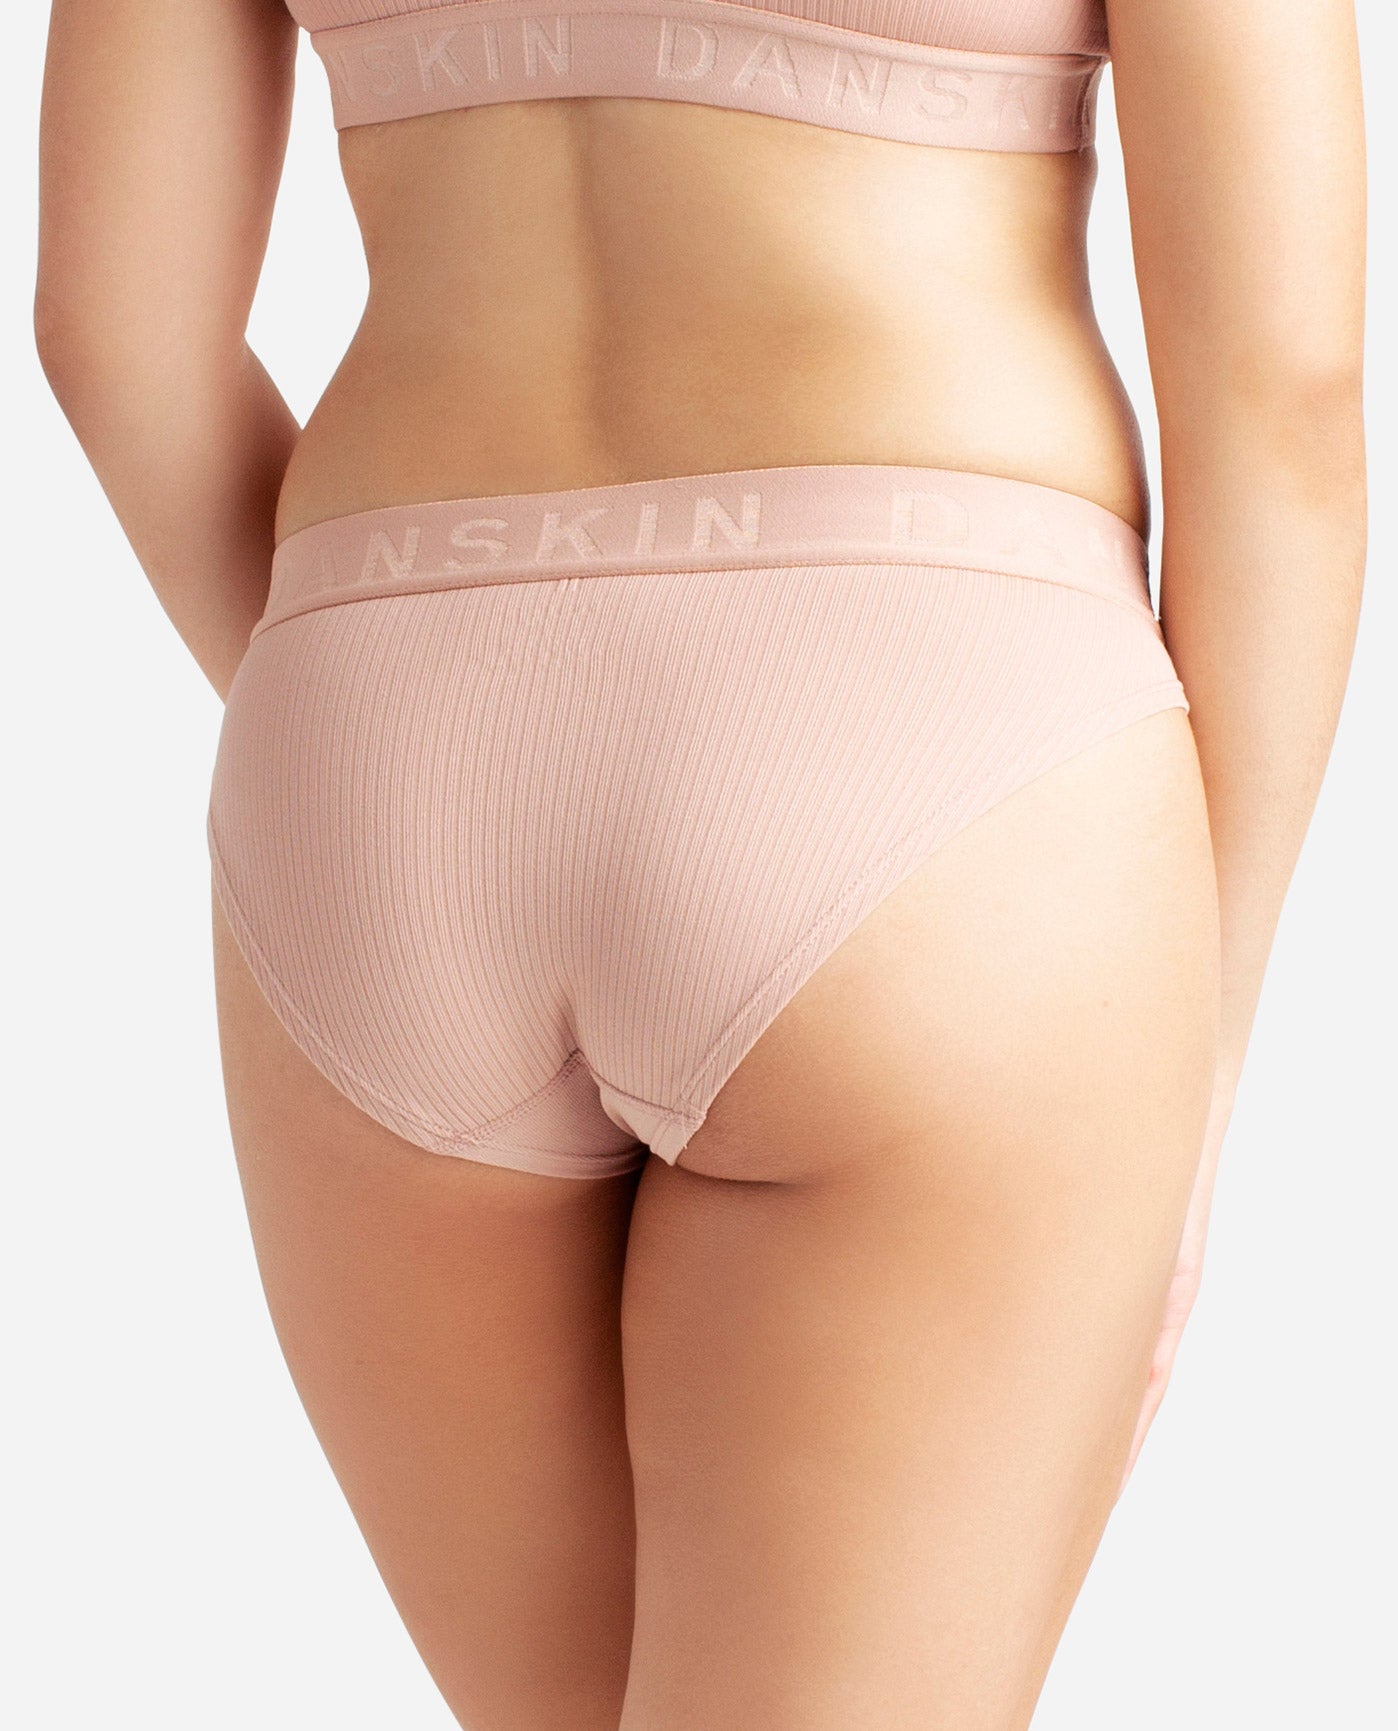 0% Off) Danskin Seamless Panties - 5-Pack, Bikini (For Women) - DS CHEETAH  STRIPE TEXTURE PRESSED PETAL/COTTONWOOD (XL ) on Sale.